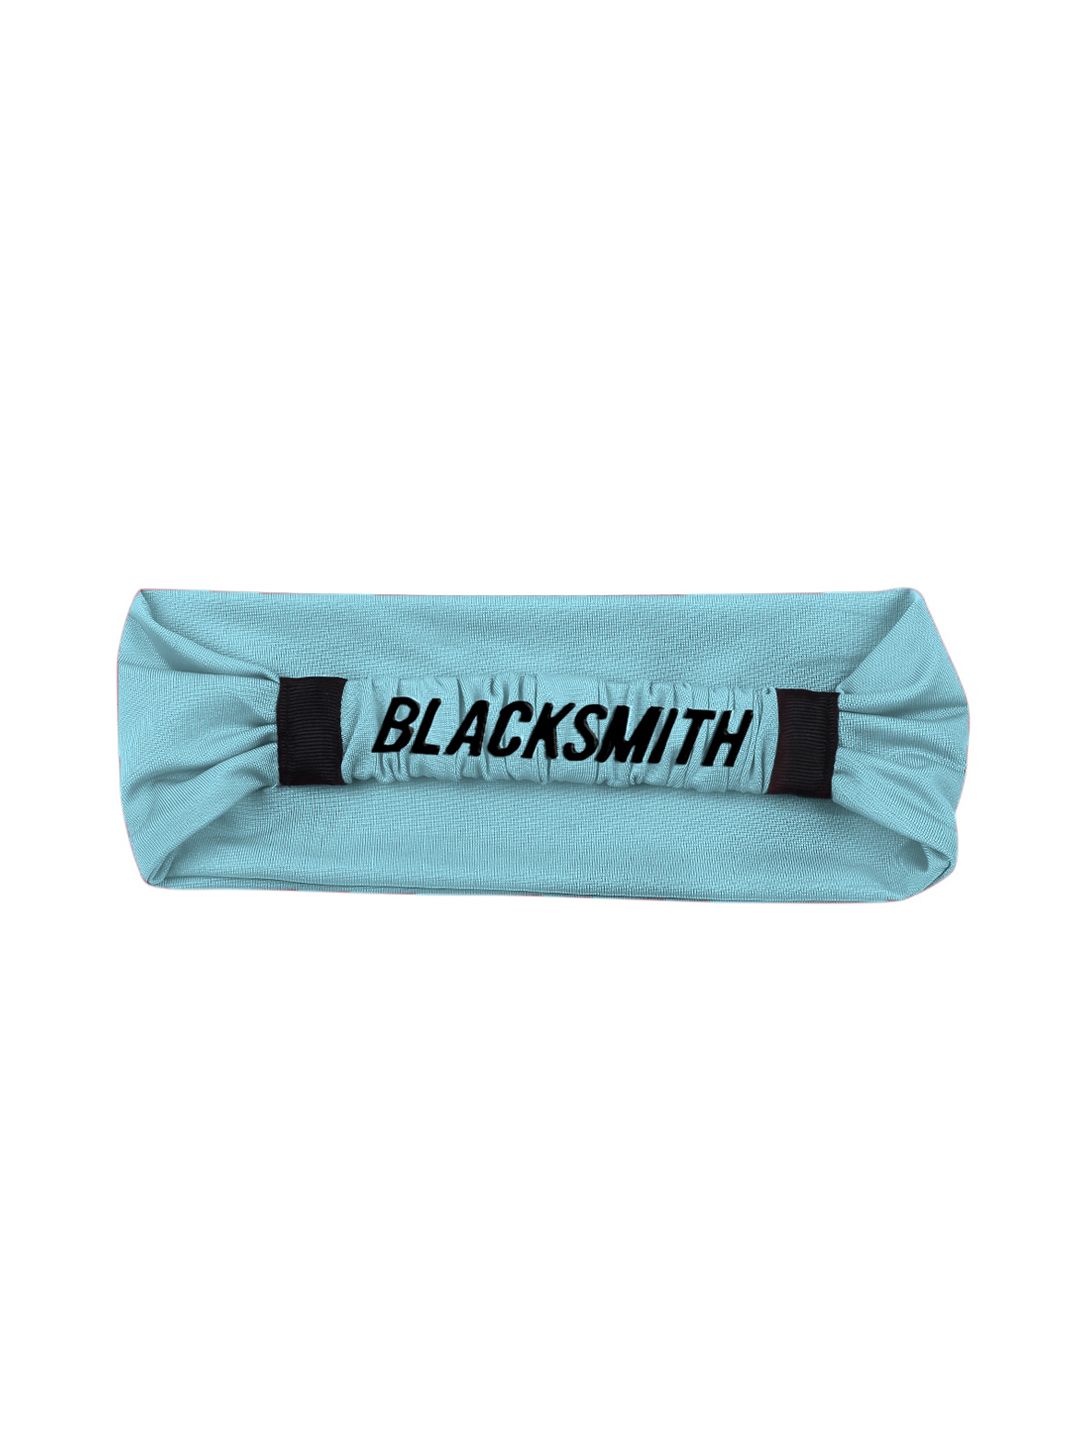 Blacksmith Blue Solid Sports Headband Price in India